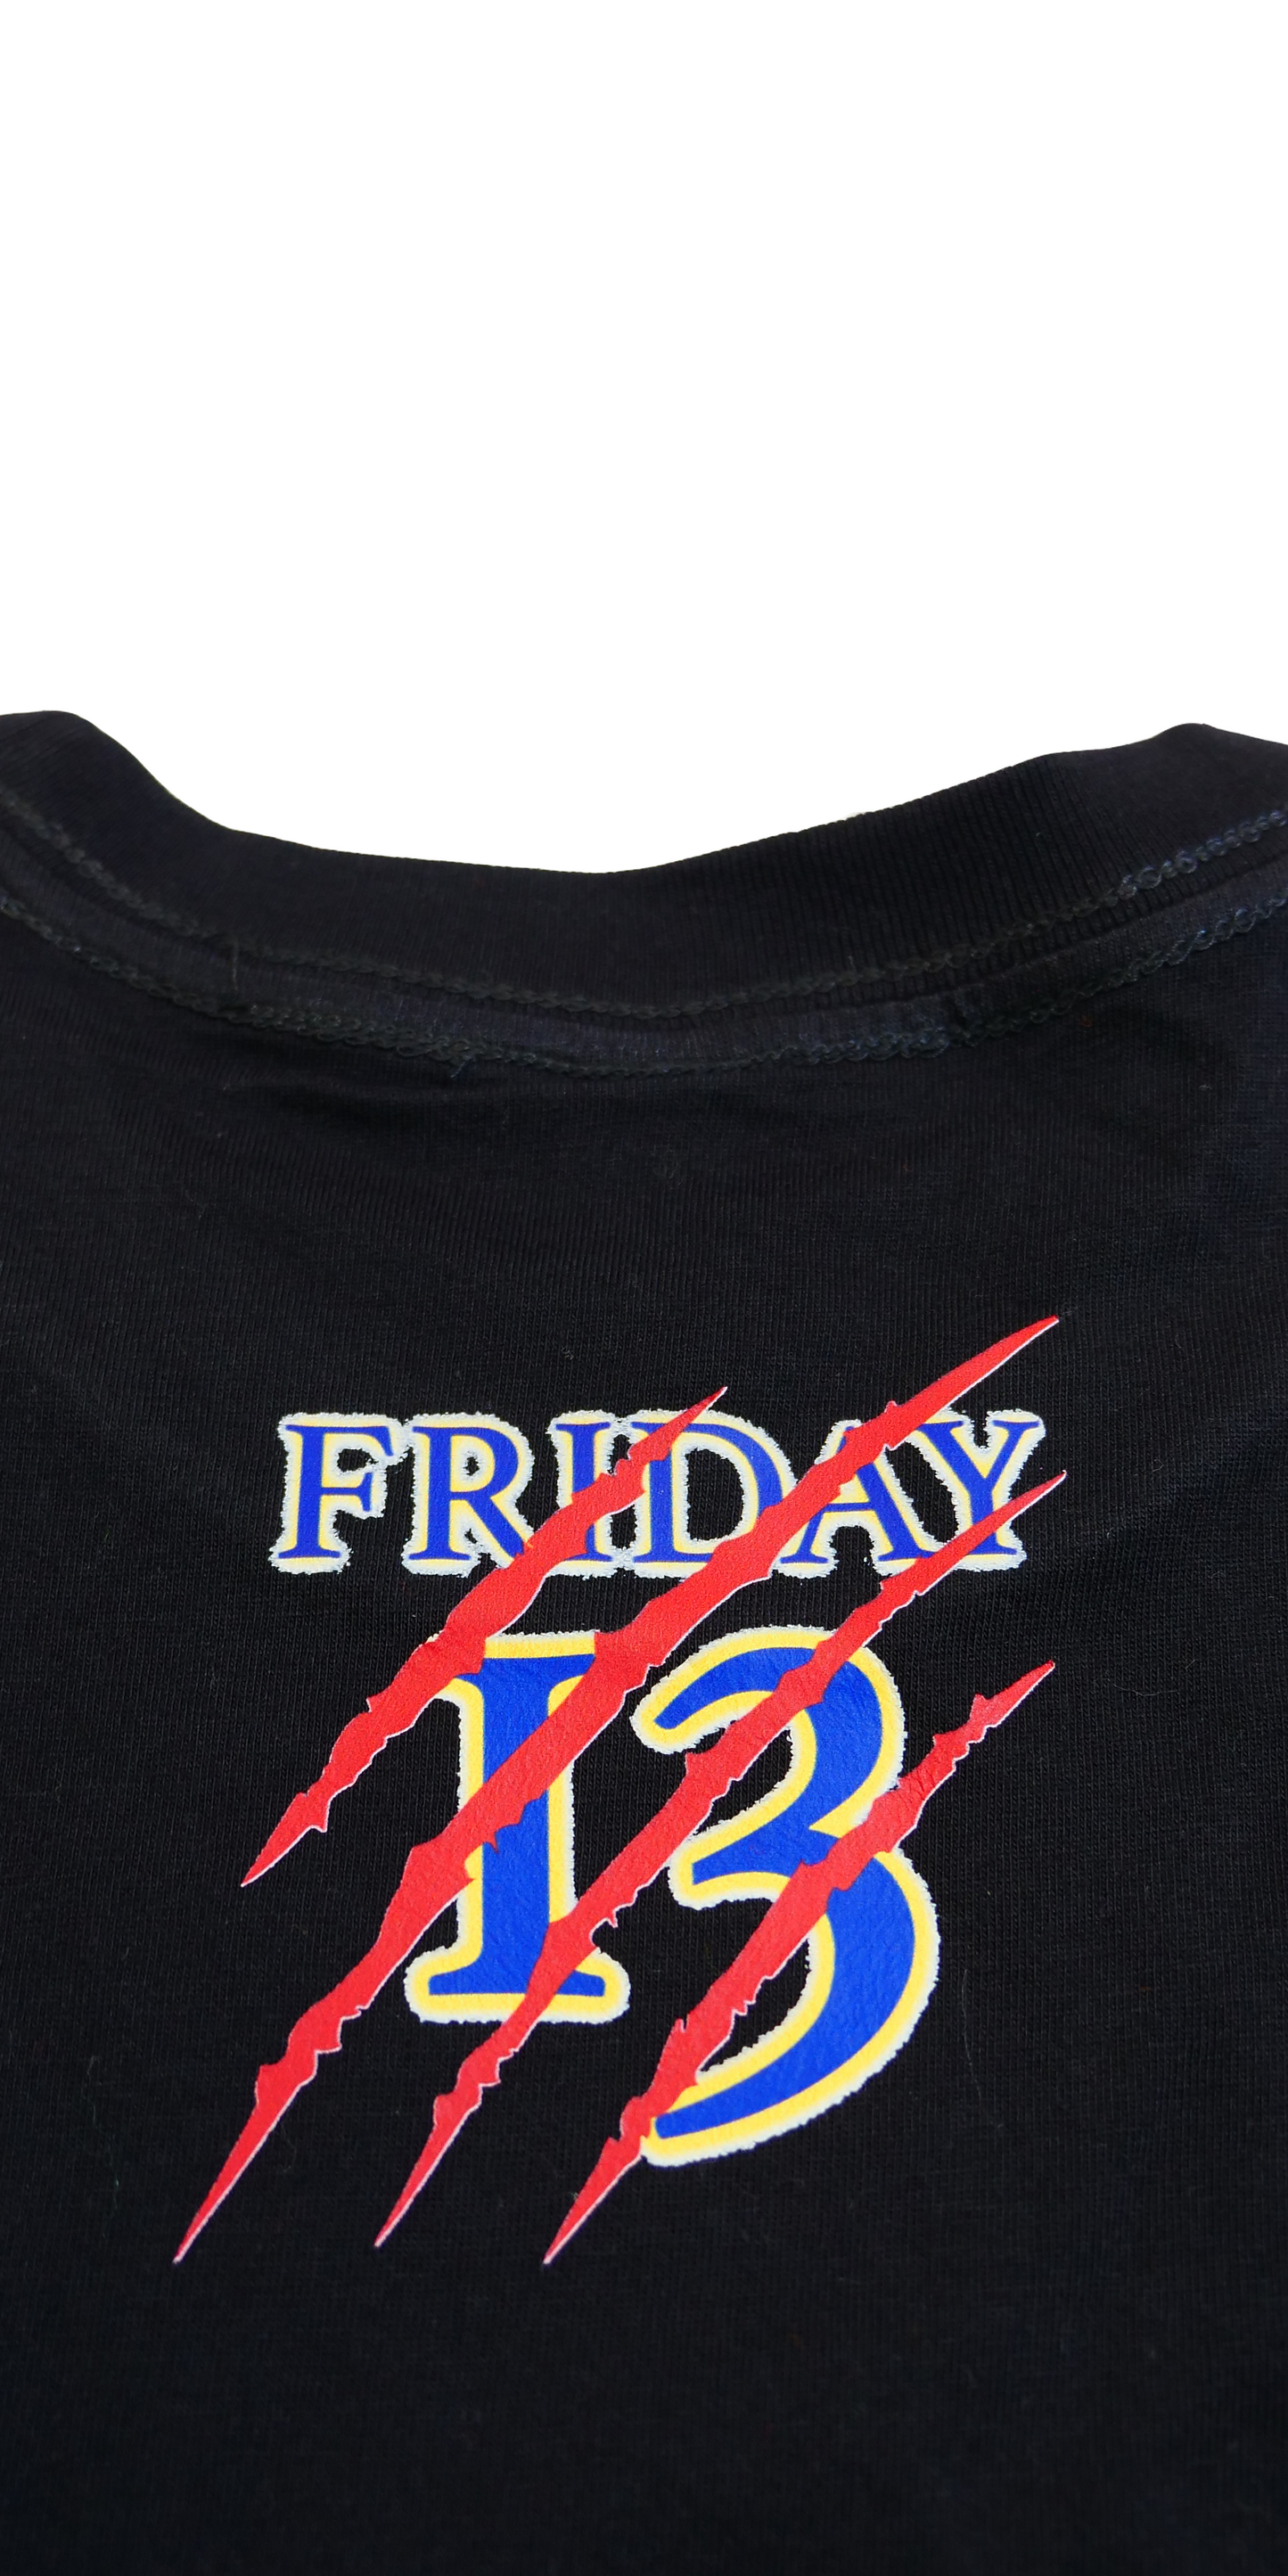 Friday 13th Applecity Nightmare T Shirts - Black